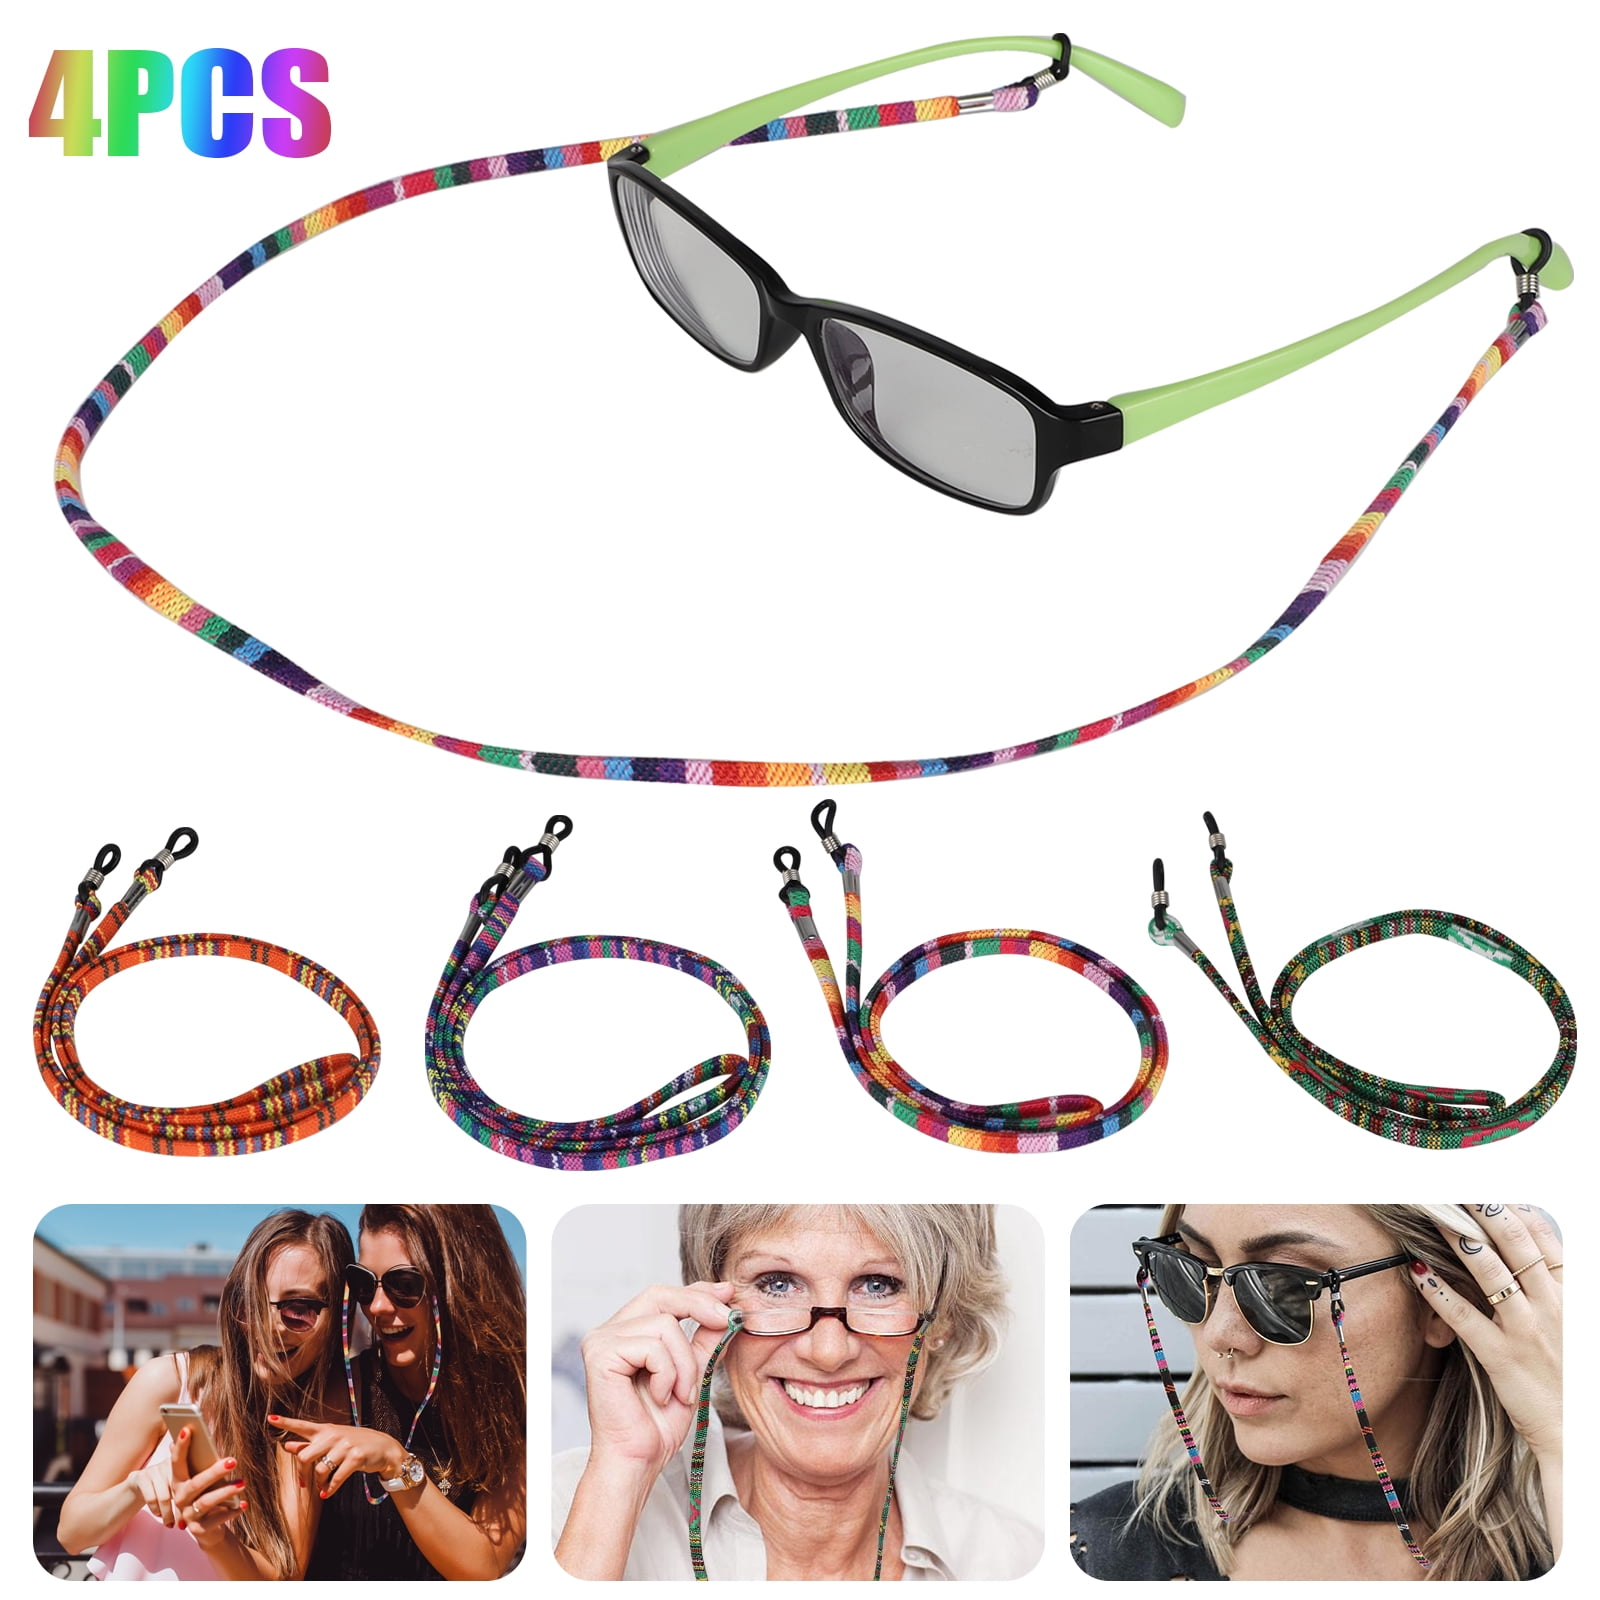 Metal Eyeglass Chains Holder Glasses Holder Sunglass Cord Neck Strap